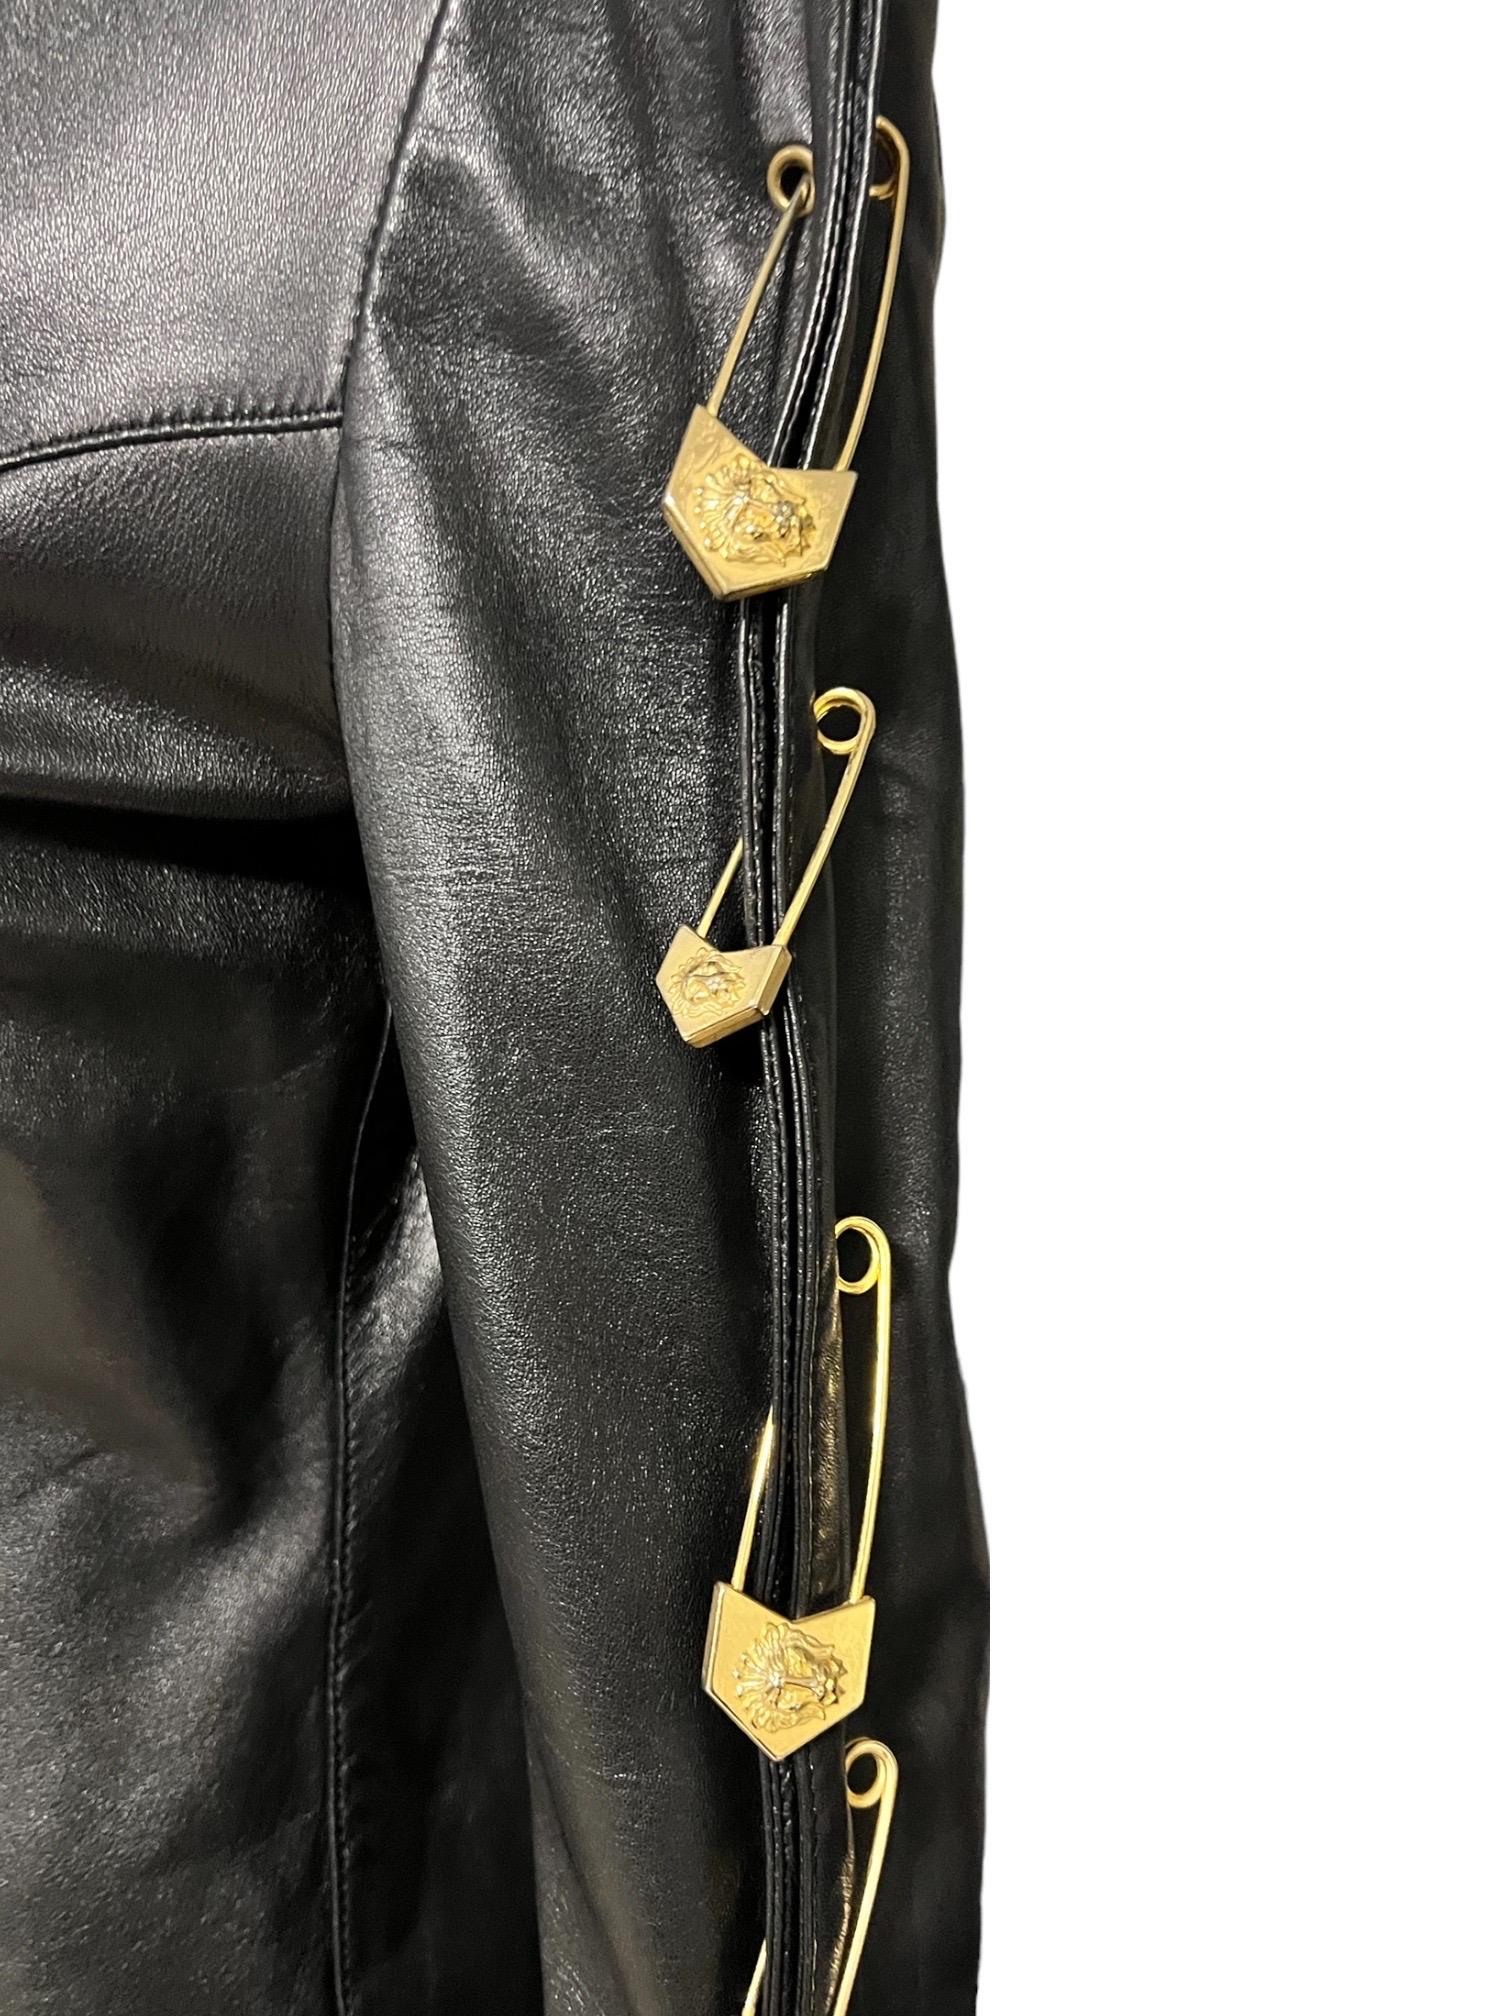 Gianni Versace Versus 90's Vintage Black Leather Safety Pin Jacket 7